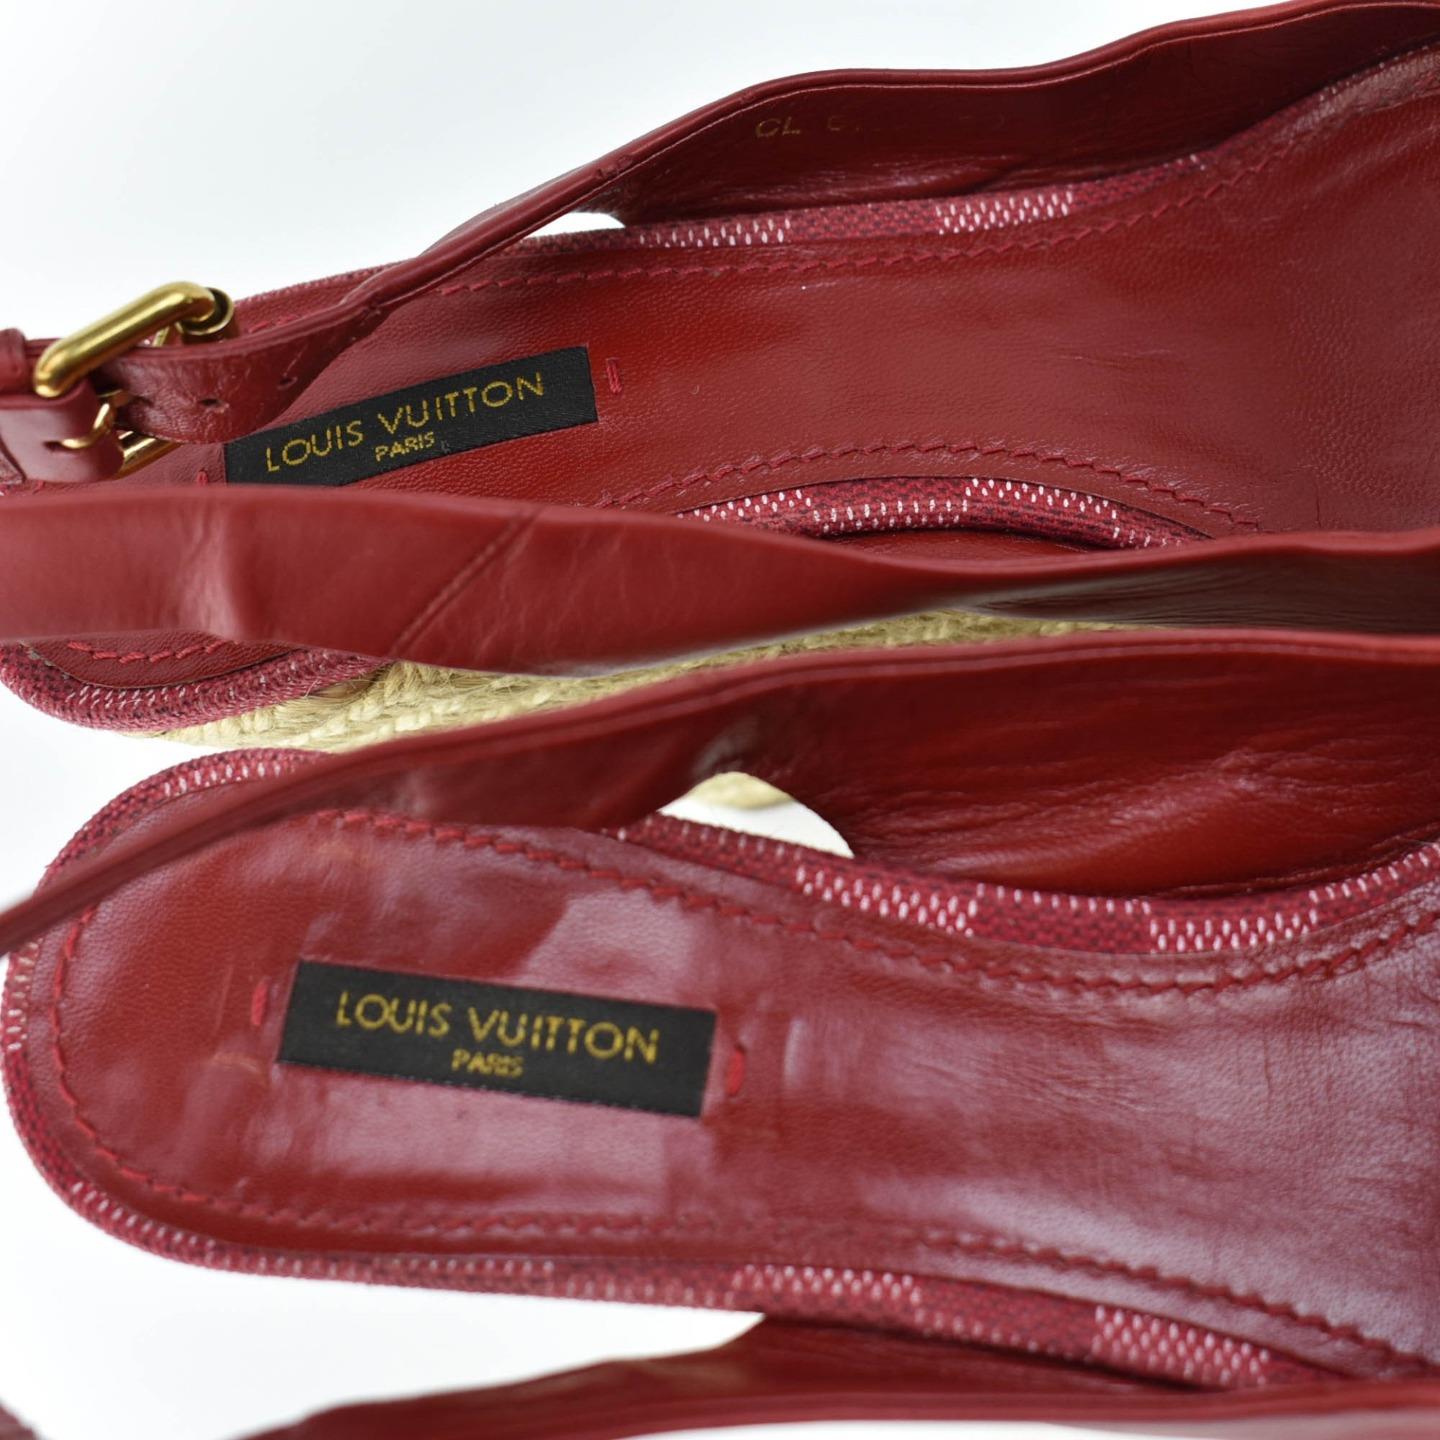 LOUIS VUITTON: Red, Leather, Espadrille & Logo &quot;Dice&quot; Wedge Heels Sz: 8.5M | eBay